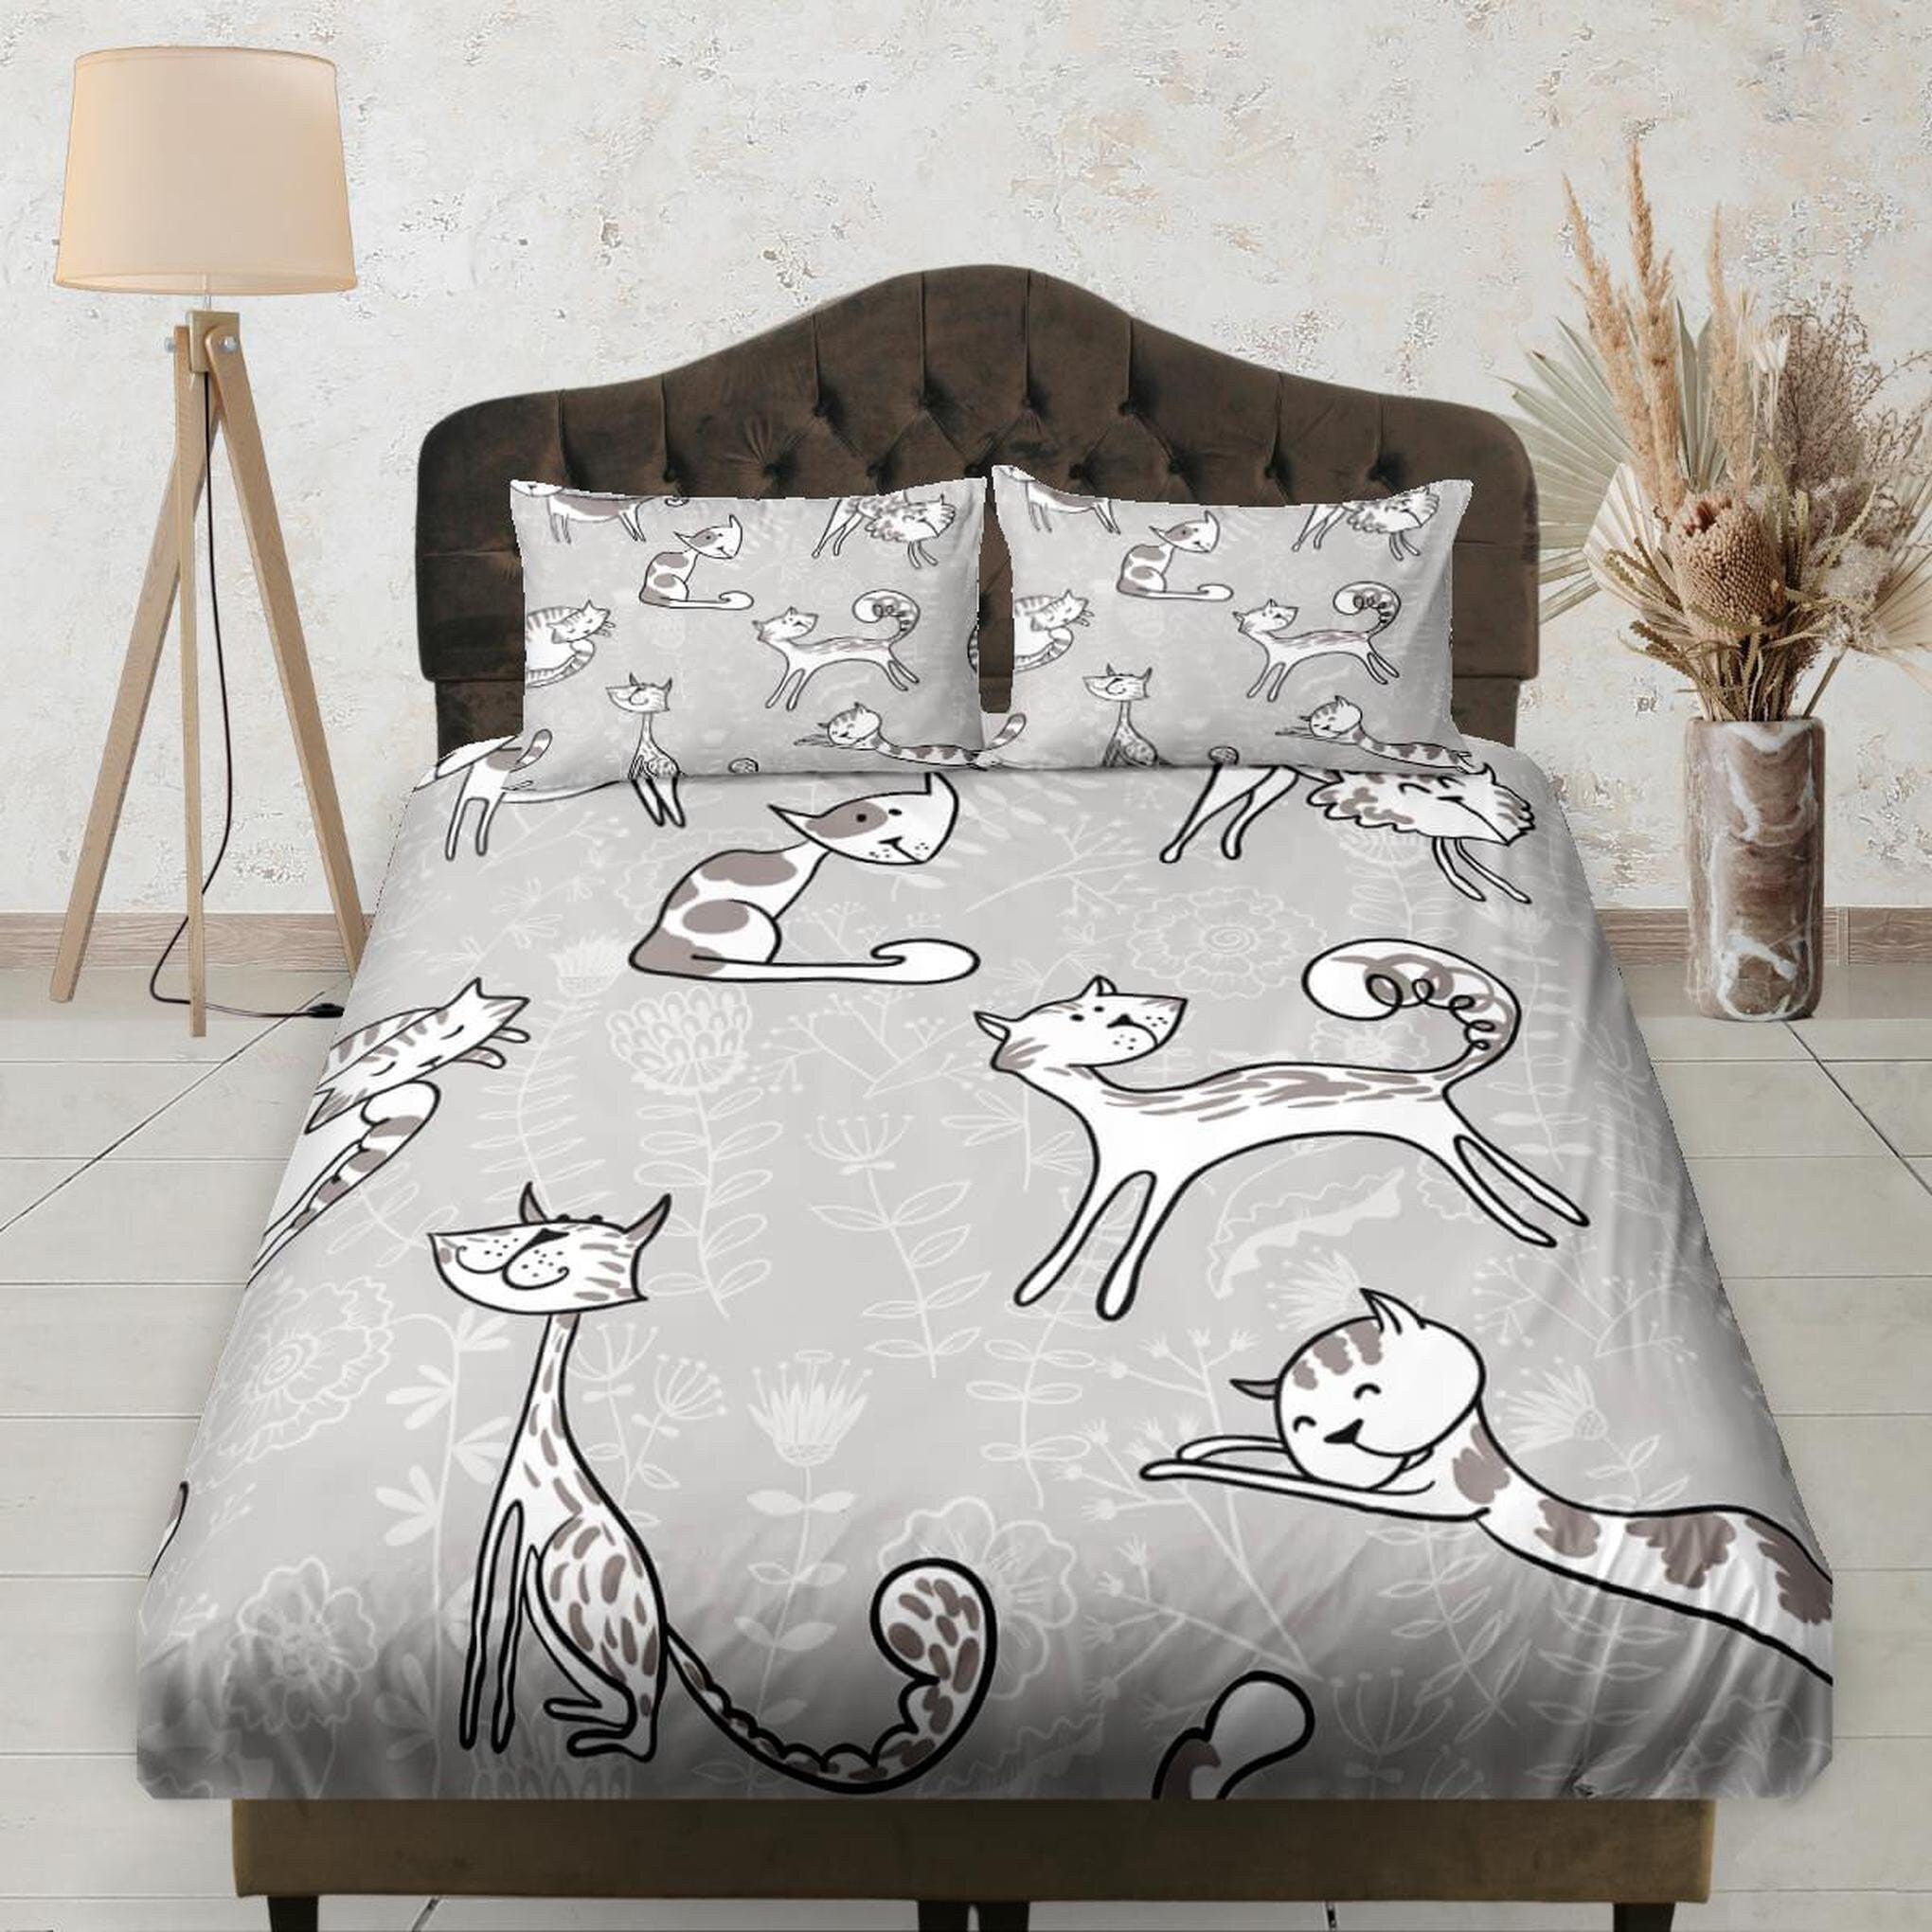 daintyduvet Cute Cats Floral Printed Grey Fitted Sheet Deep Pocket, Aesthetic Bedding Set Full, Elastic Bedsheet, Dorm Bedding, Crib Sheet, King, Queen